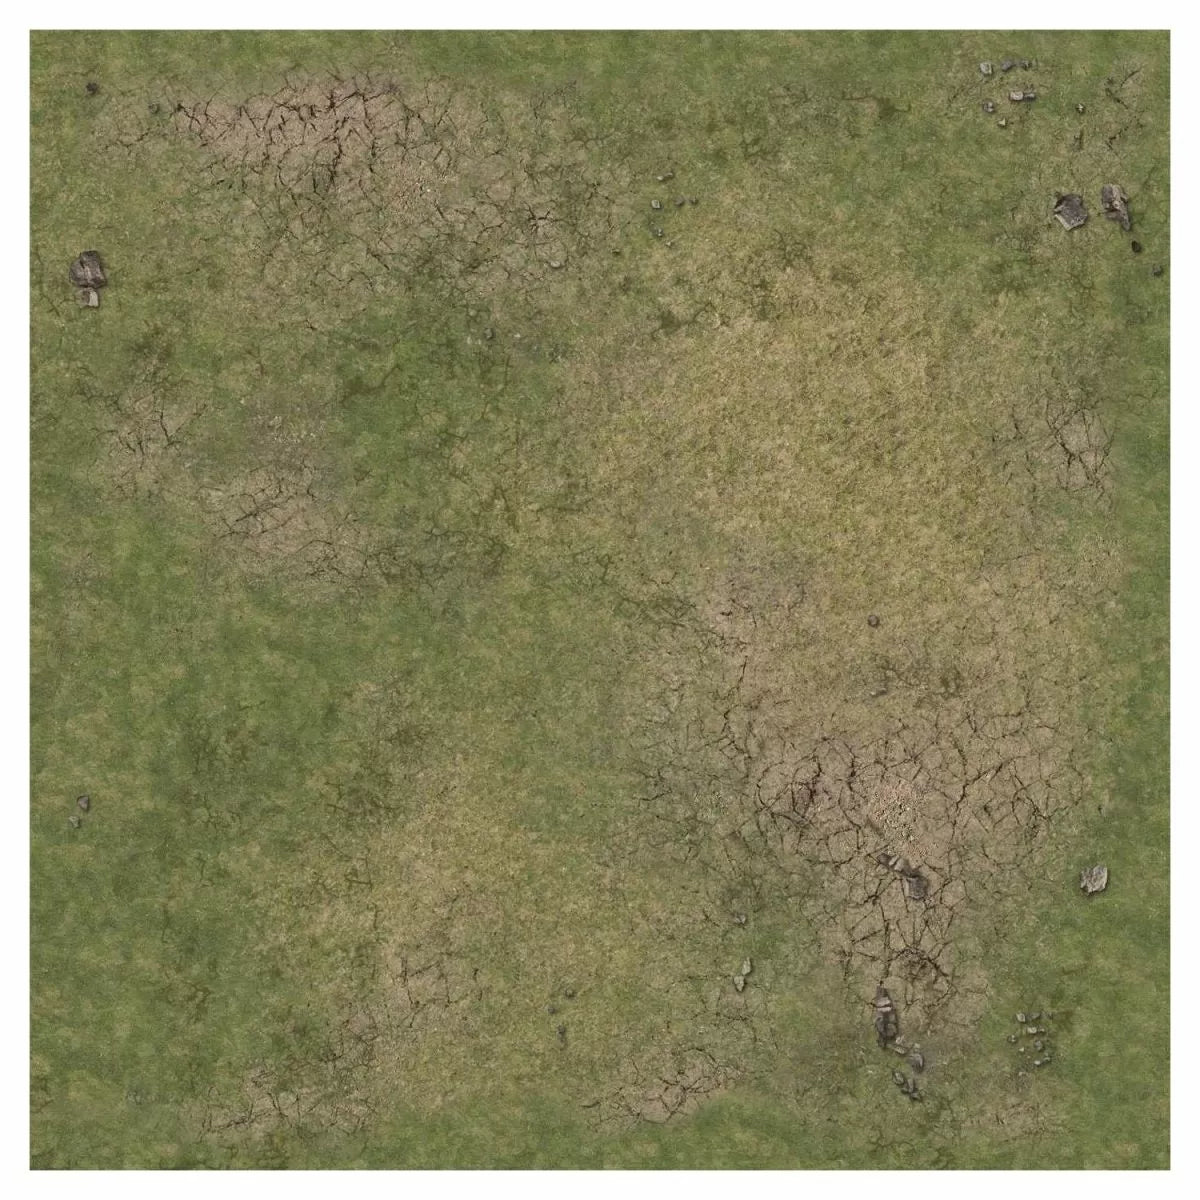 Battle Systems - Grassy Field Gaming Mat 2x2